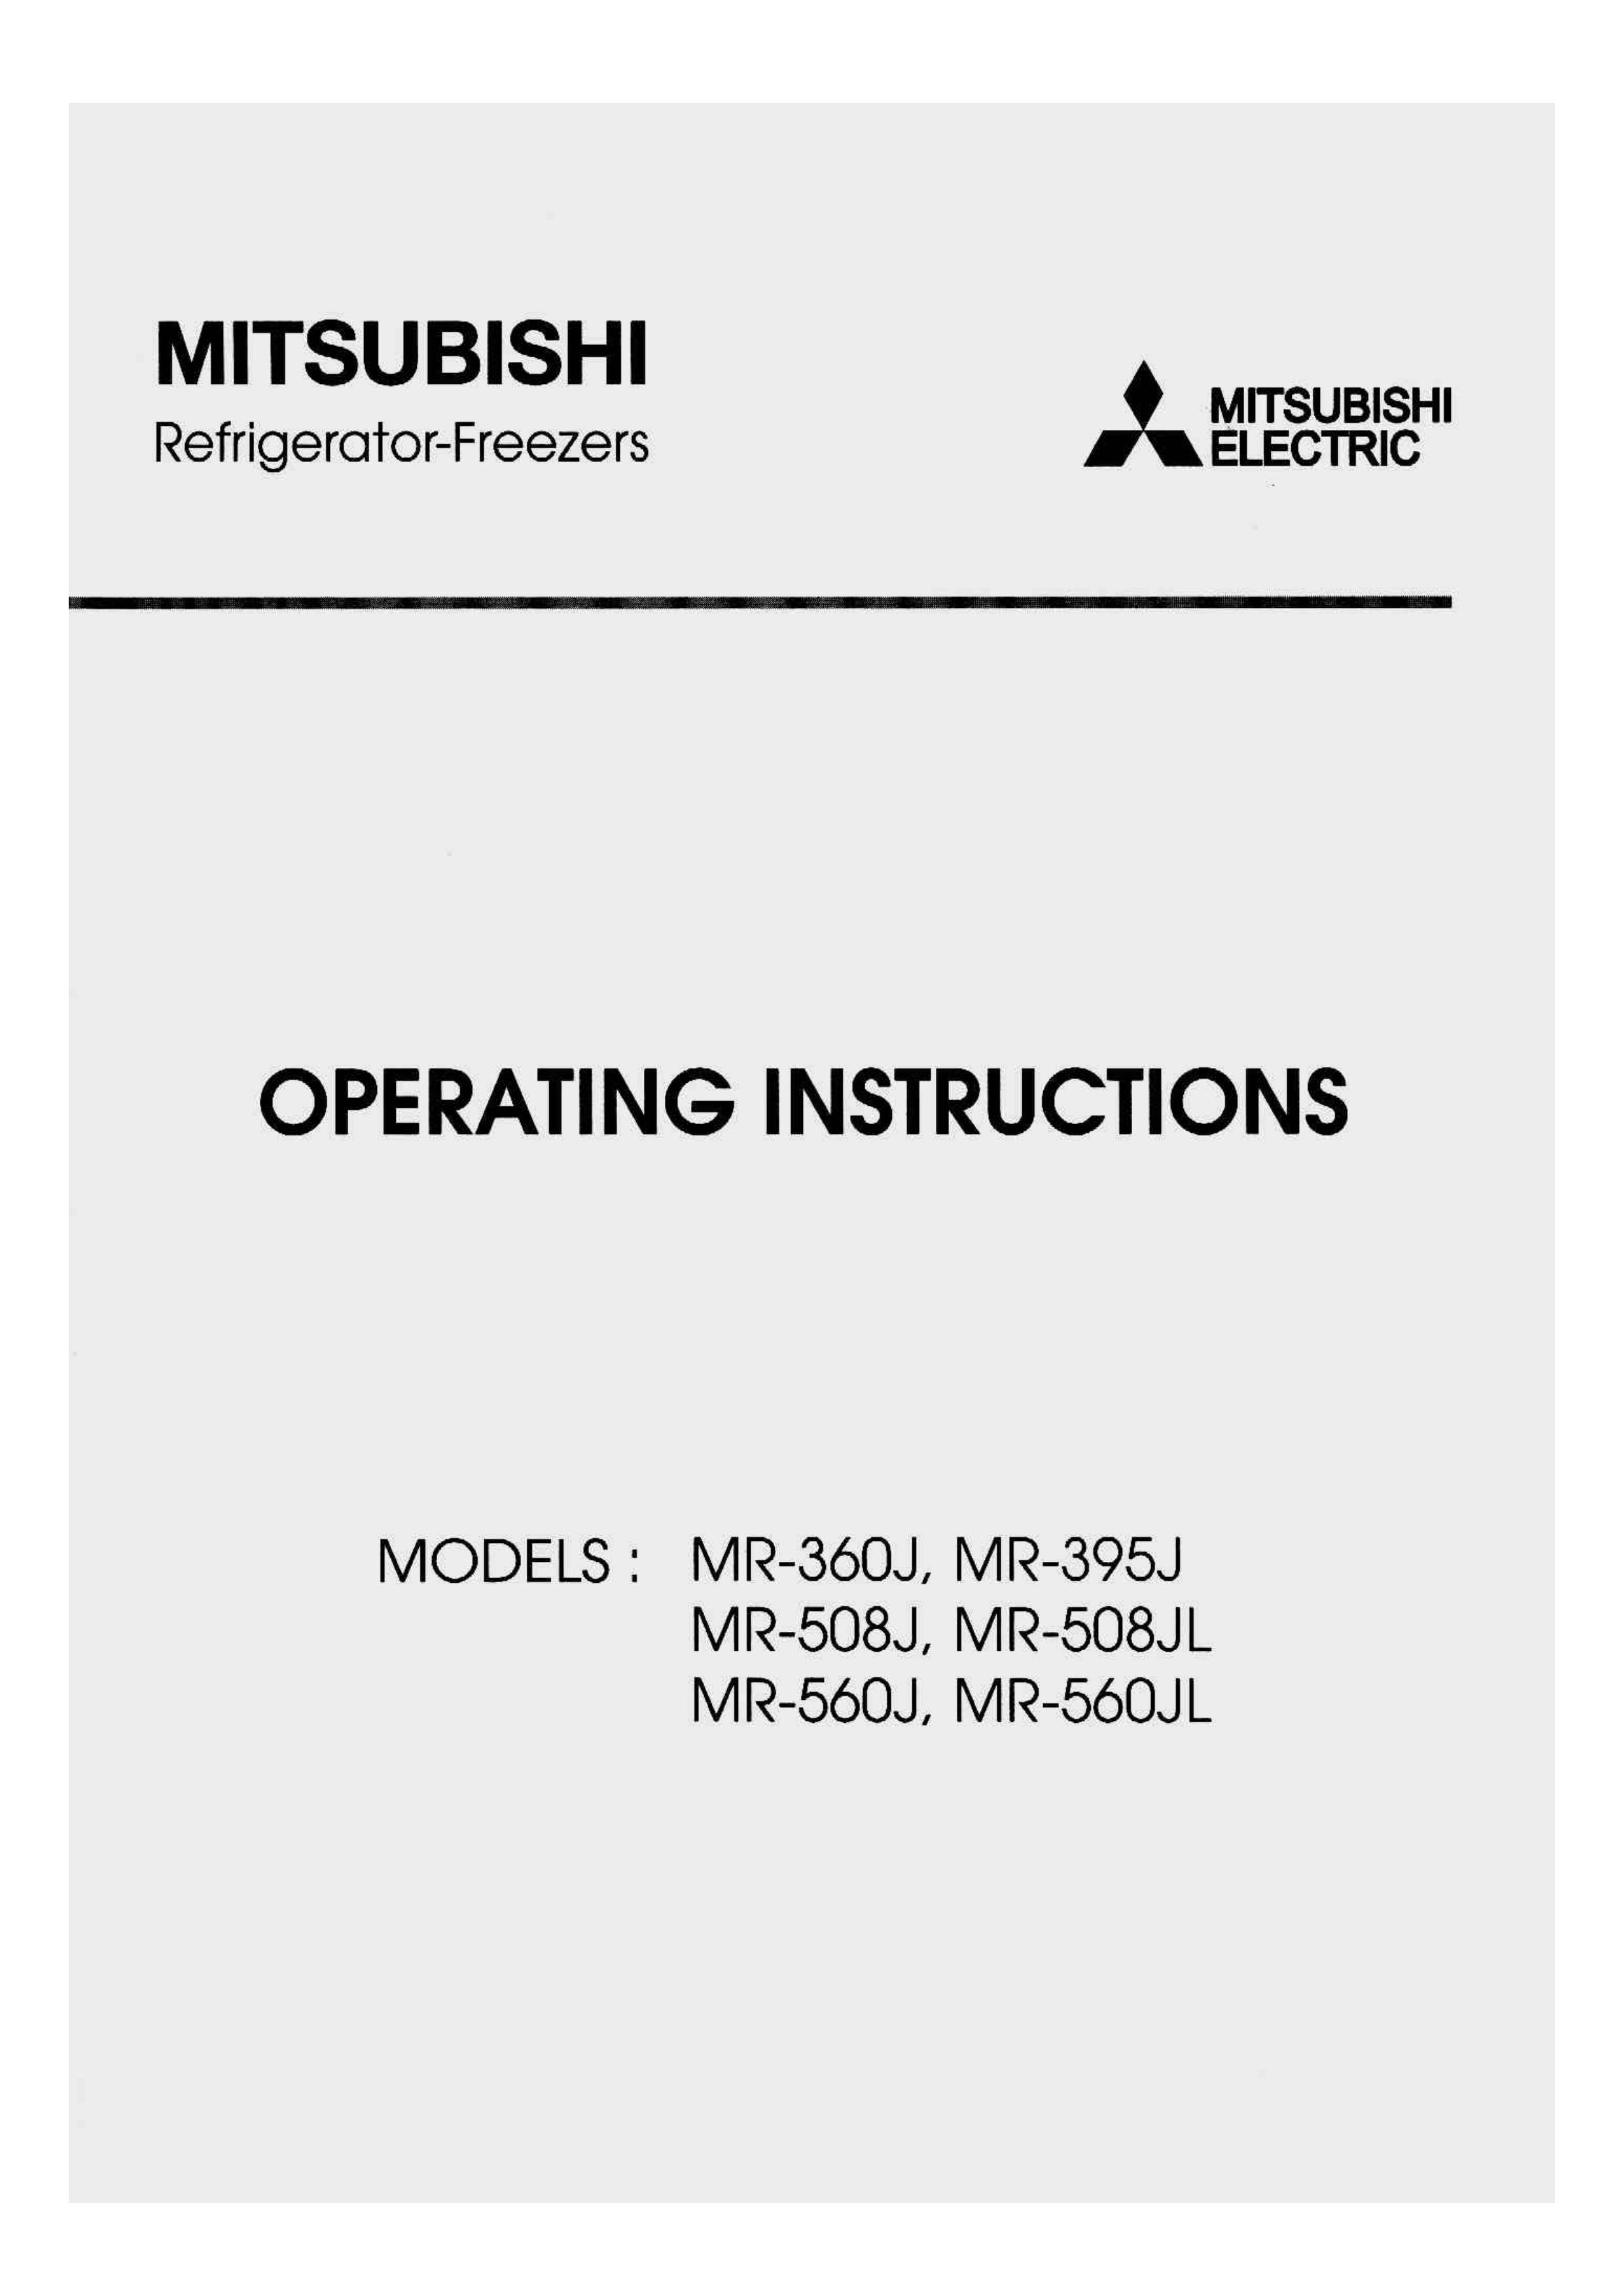 Mitsubishi Electronics MR-508J Refrigerator User Manual